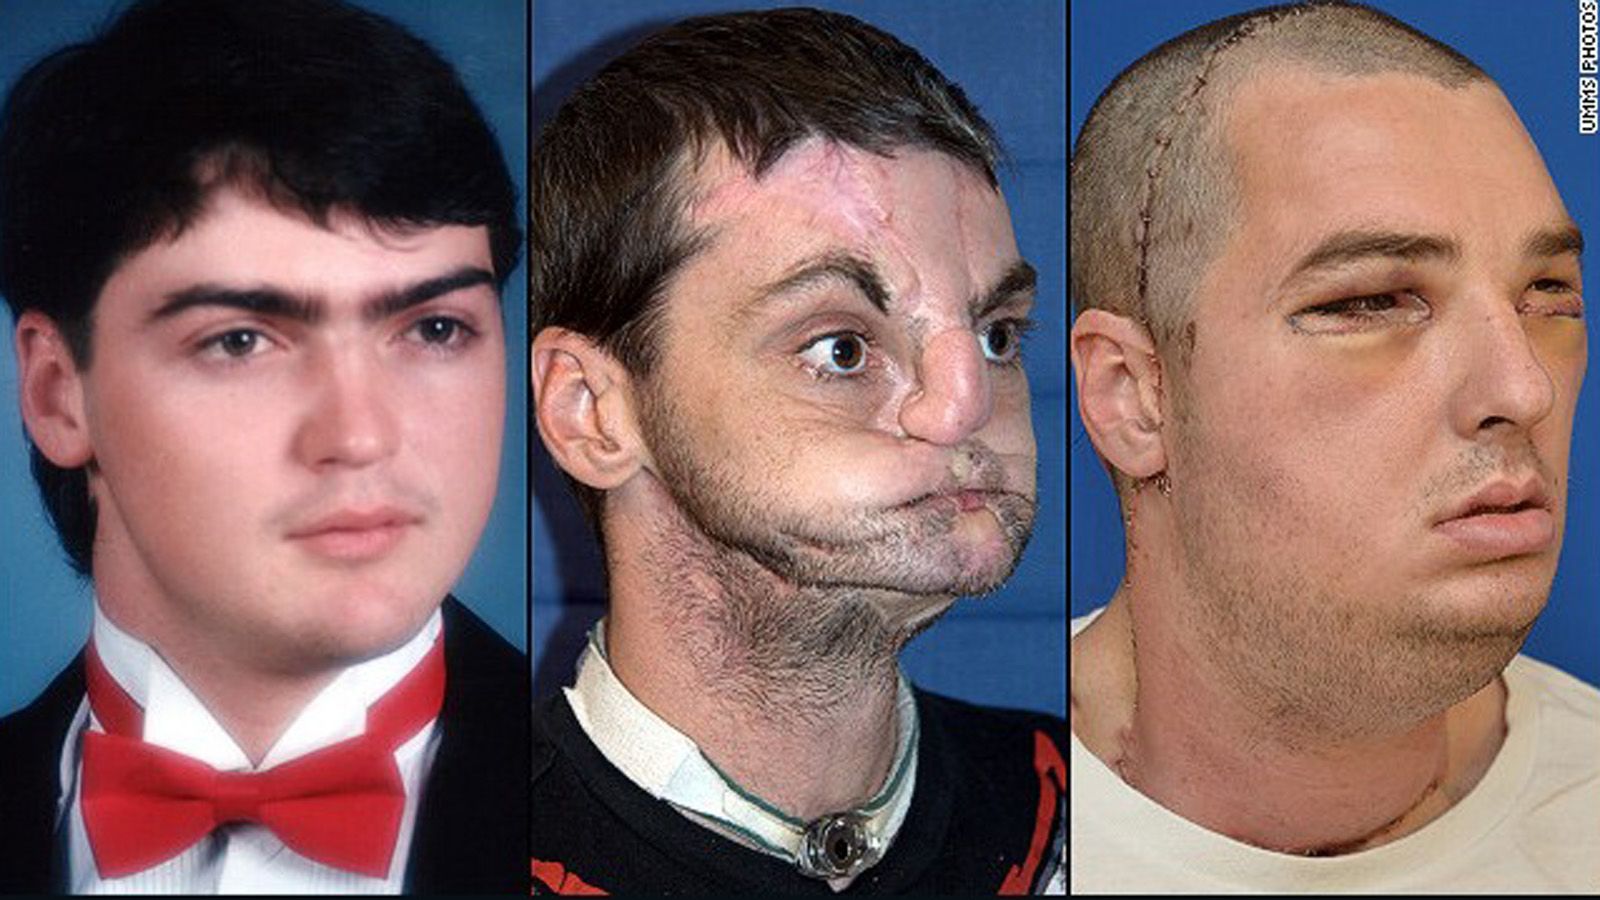 Facial discrimination: Living with a disfigured face